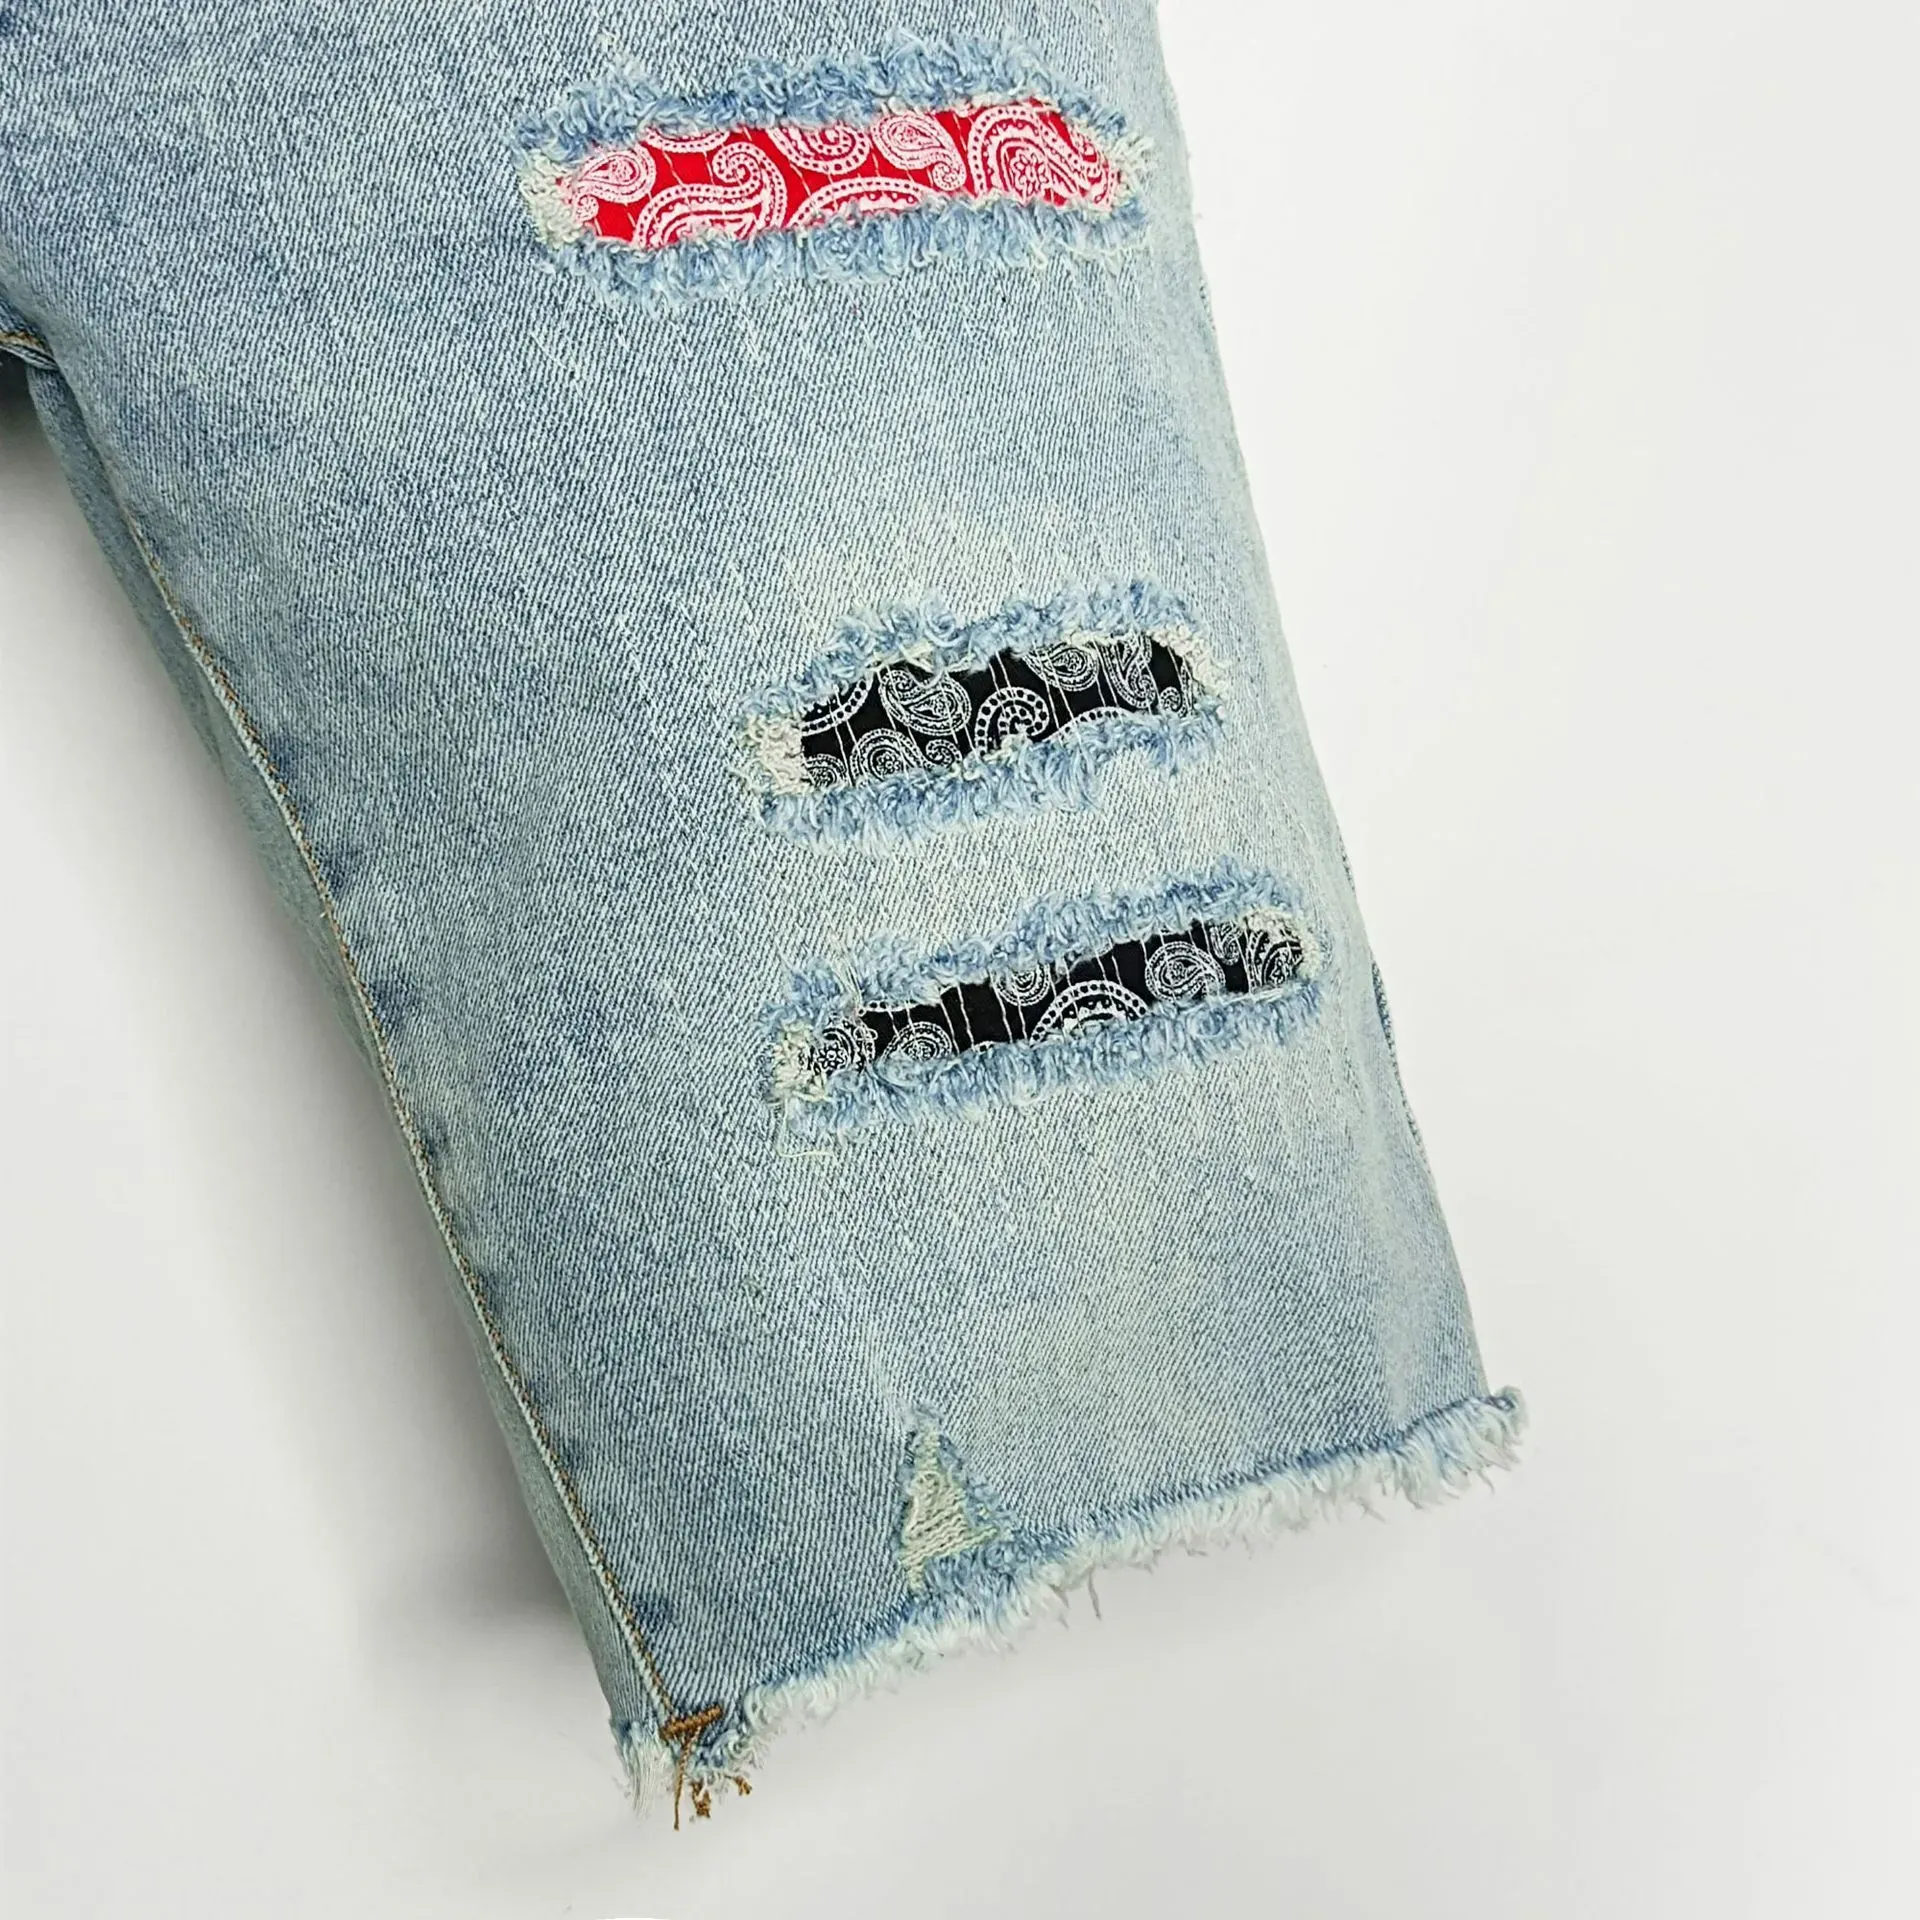 American Men Jeans Designer Women Short Jean Pocket Button Fly Straight Holes Tight Burrs Ripped Cloth Denim Shorts Blue Purple